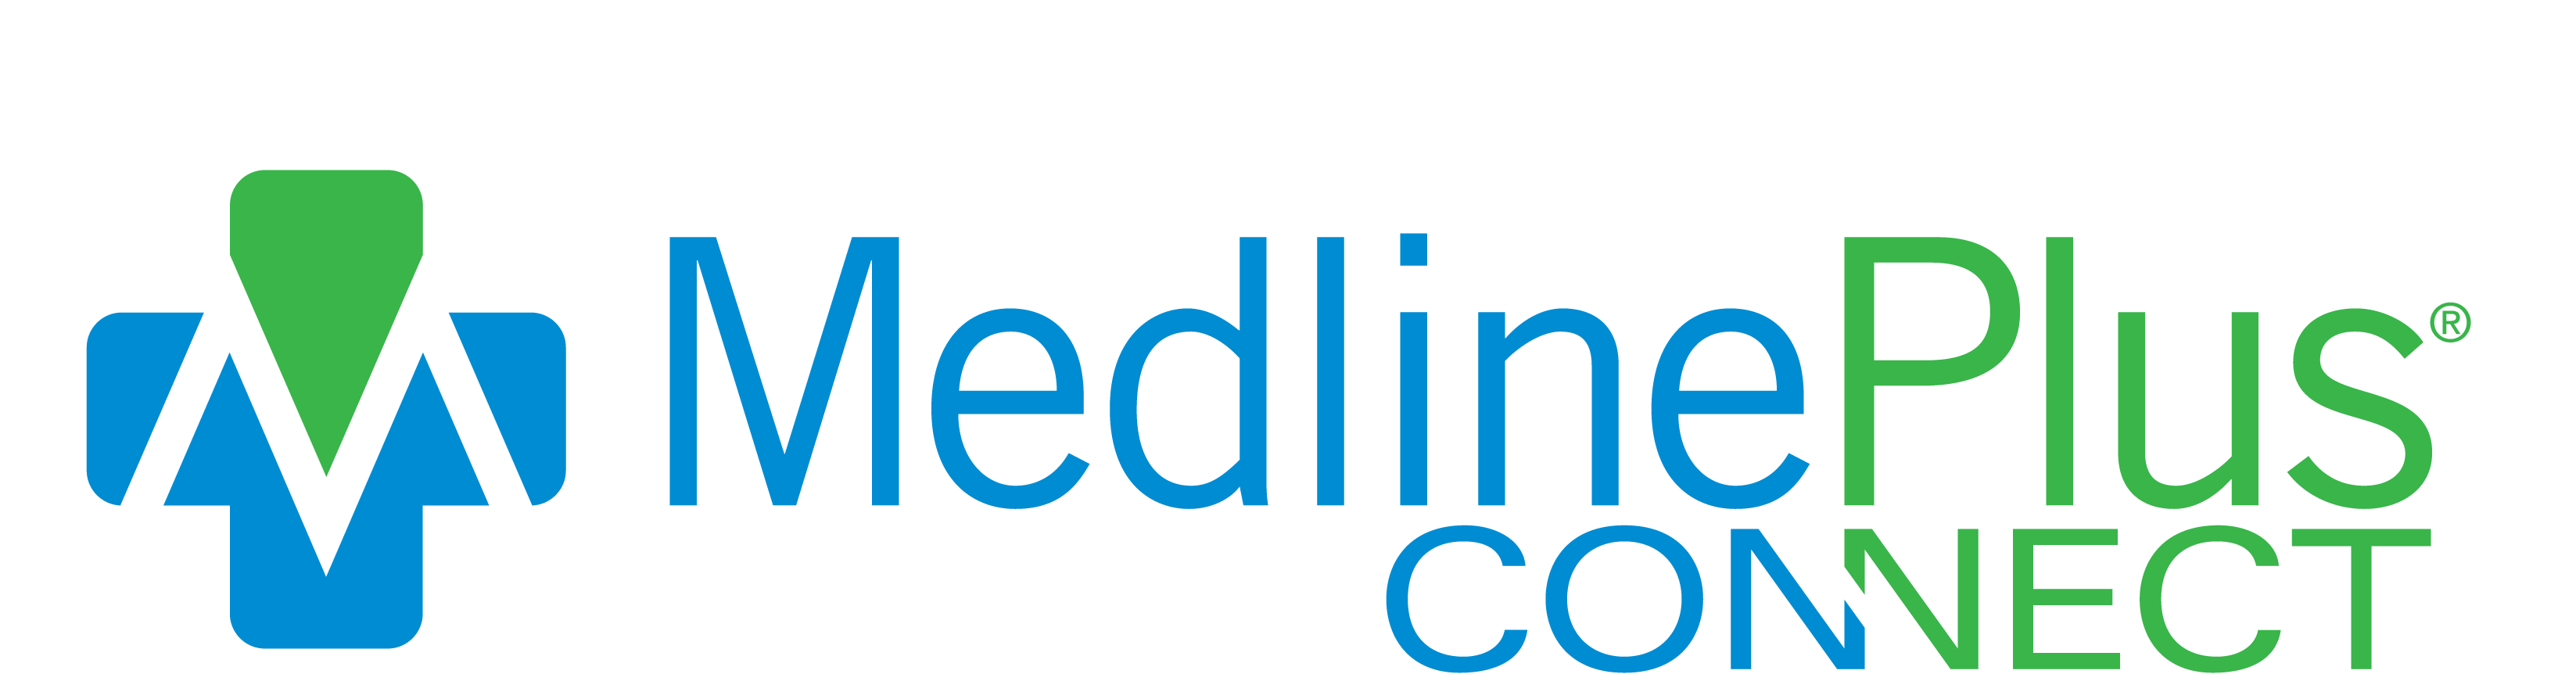 Connect trust. MEDLINEPLUS. Медлайн логотип. National Library of Medicine. National Library of Medicine logo.